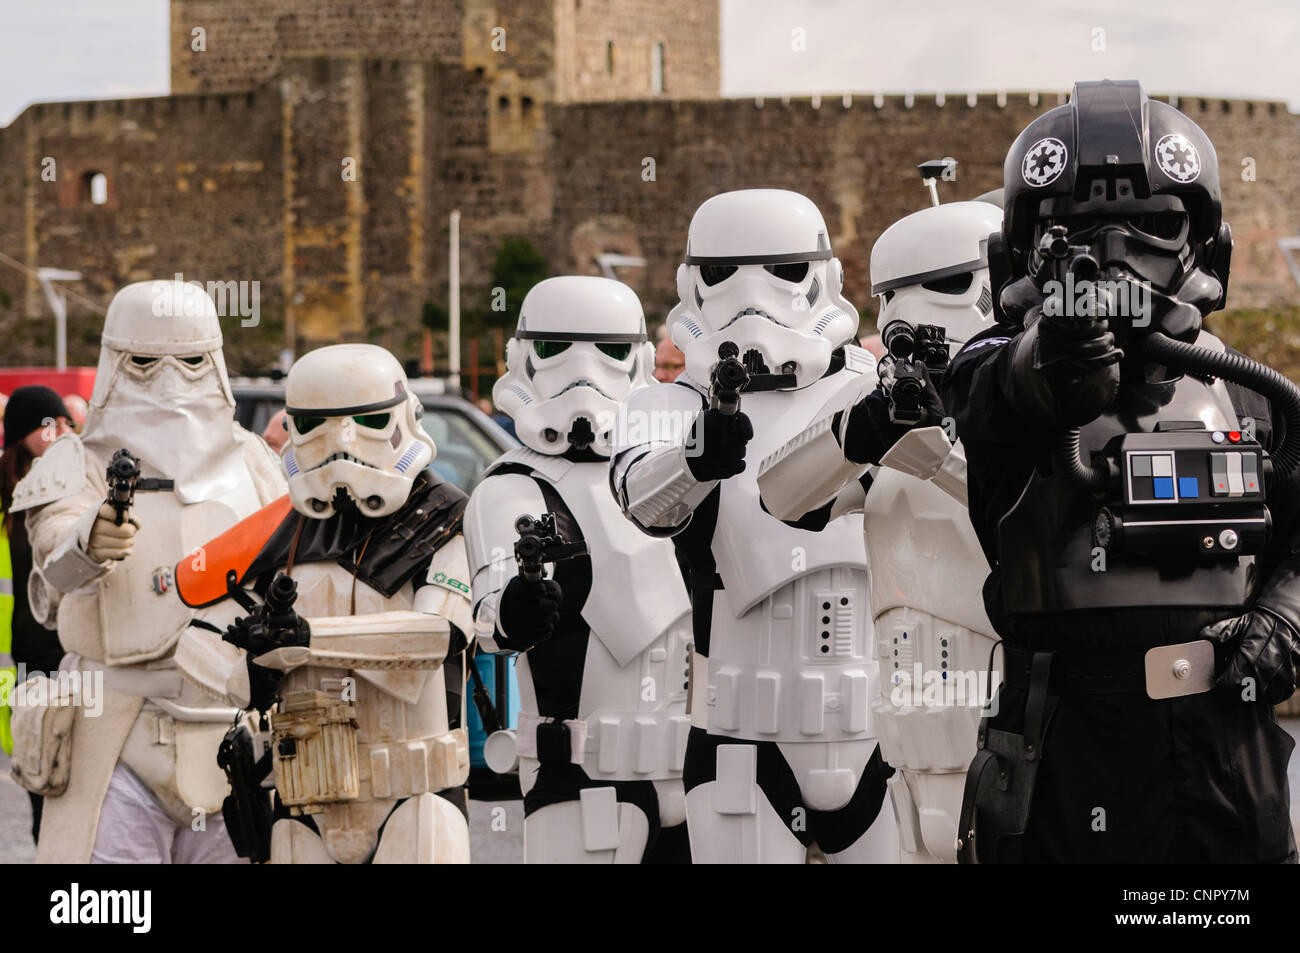 Star Wars fans dressed as Stormtroopers perform in Carrickfergus Stock Photo